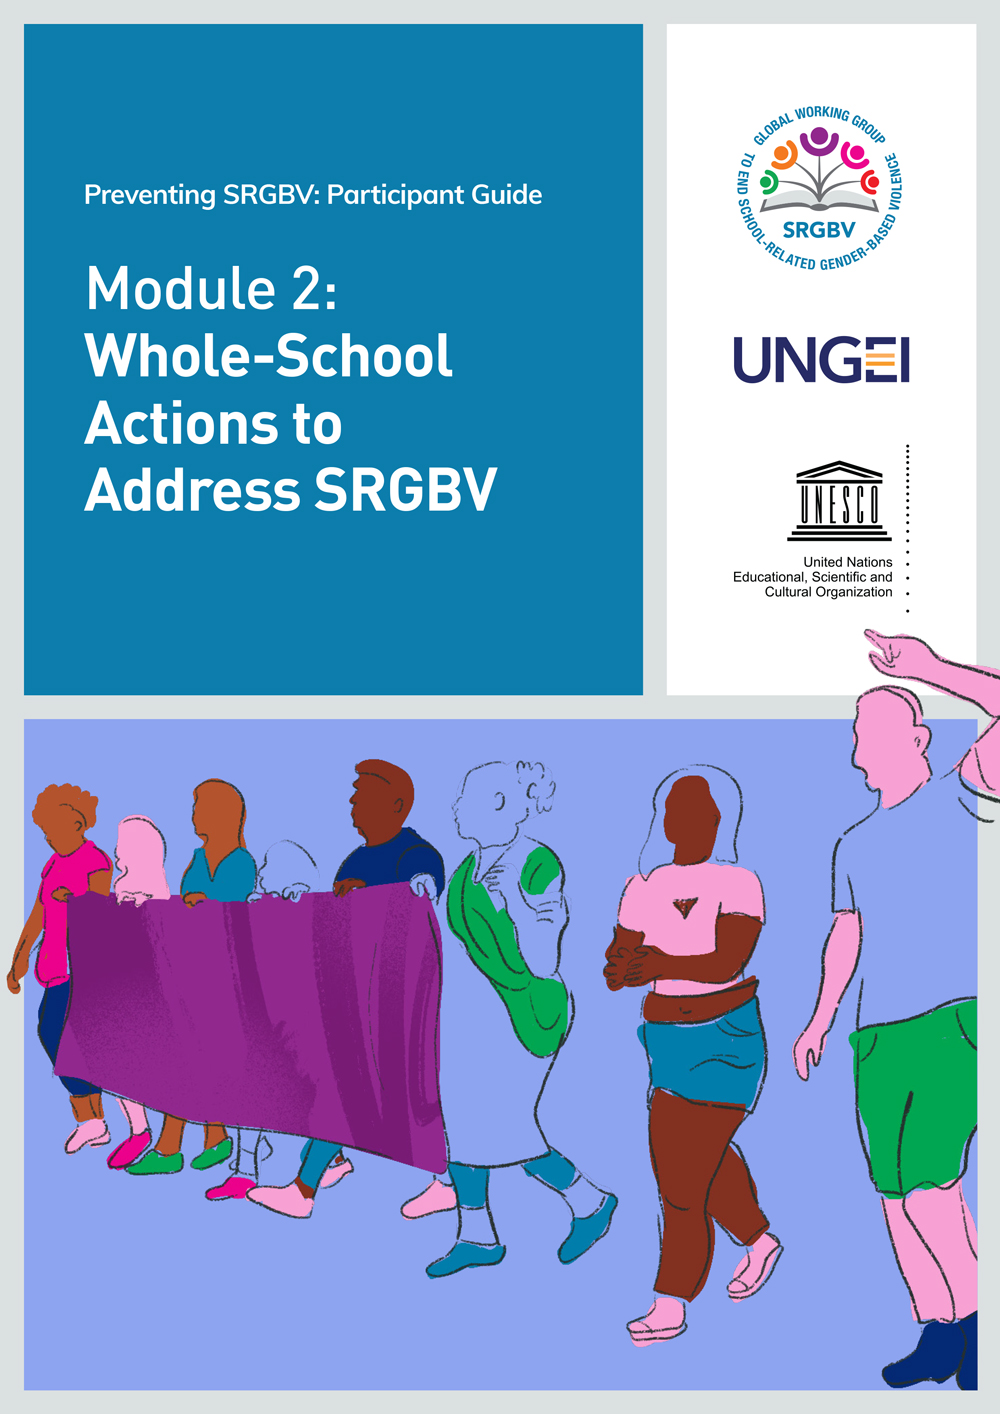 Preventing SRGBV - Module 02 participants guide